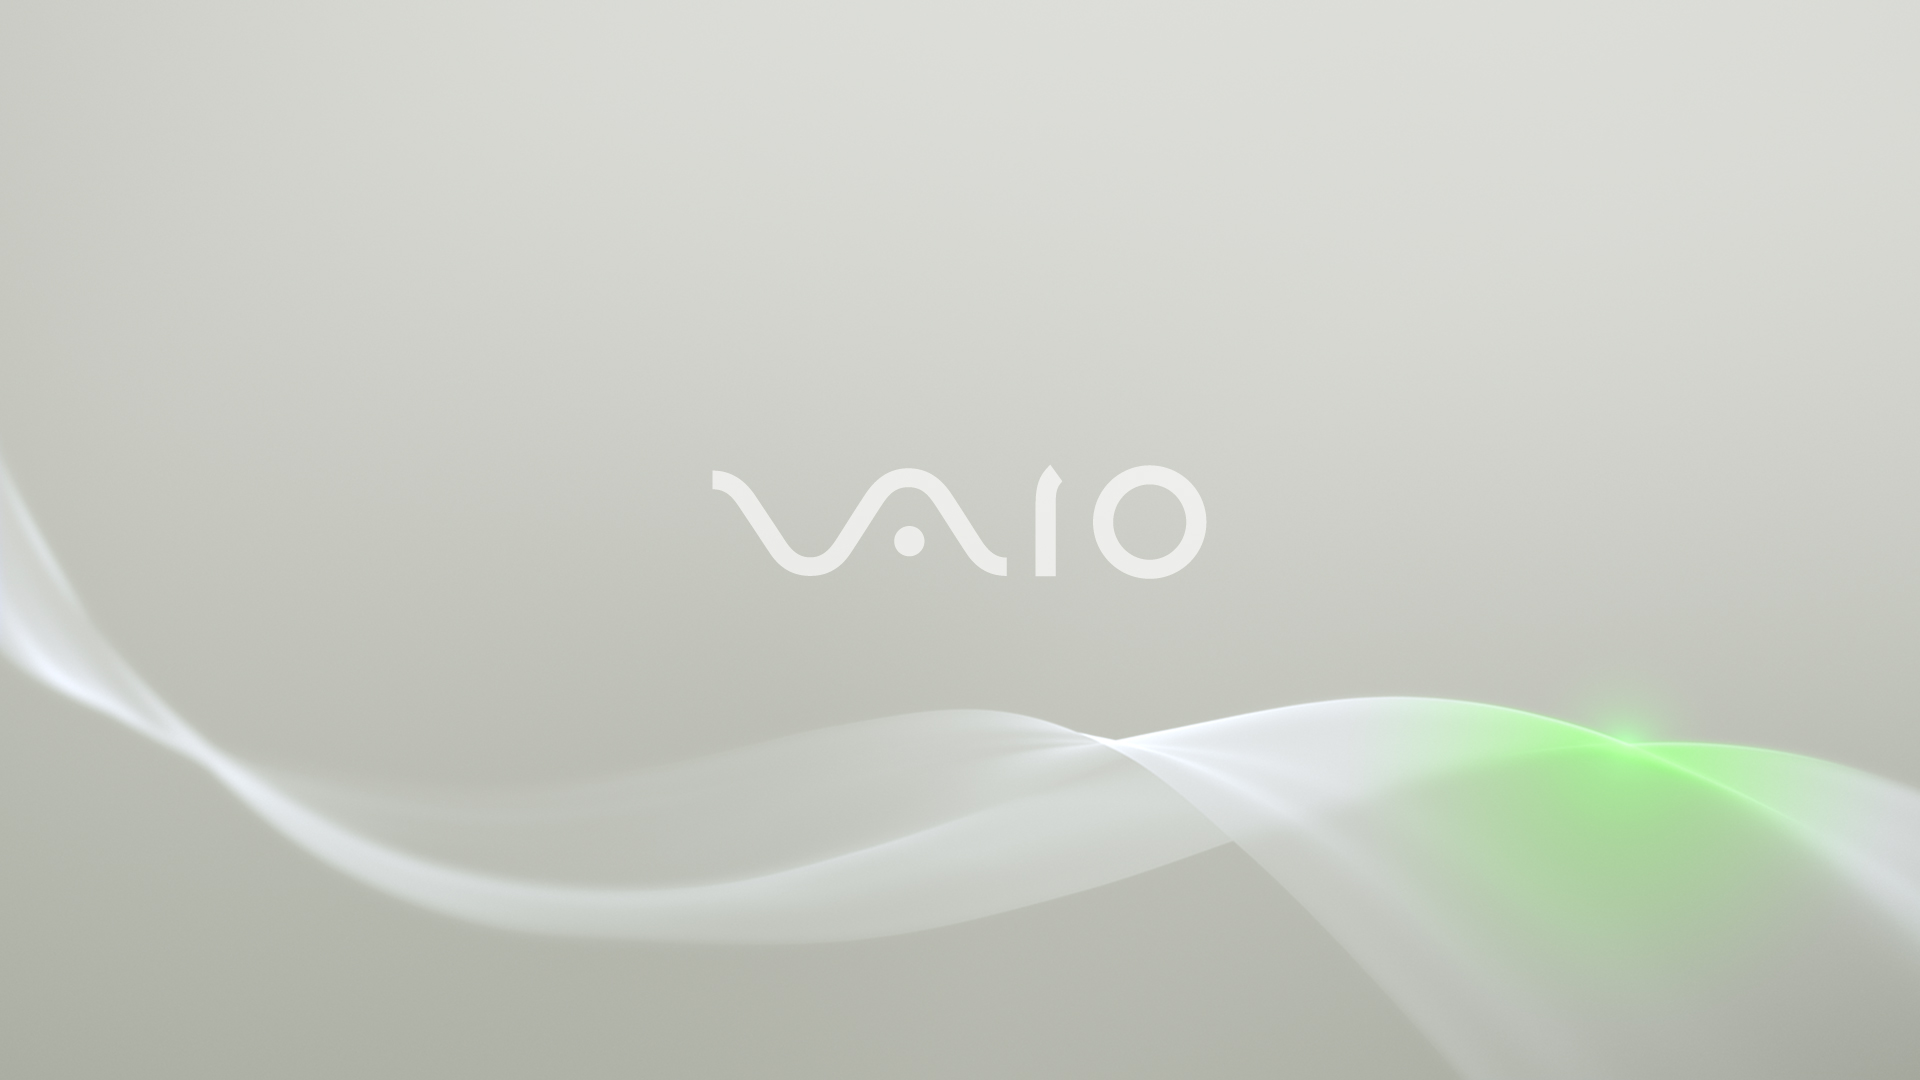 Free download Sony Vaio wallpaper 1223313 [1920x1080] for your Desktop, Mobile & Tablet. Explore Sony Vaio Wallpaper. Sony Vaio Wallpaper, Vaio Wallpaper, Sony Vaio Wallpaper 1366x768